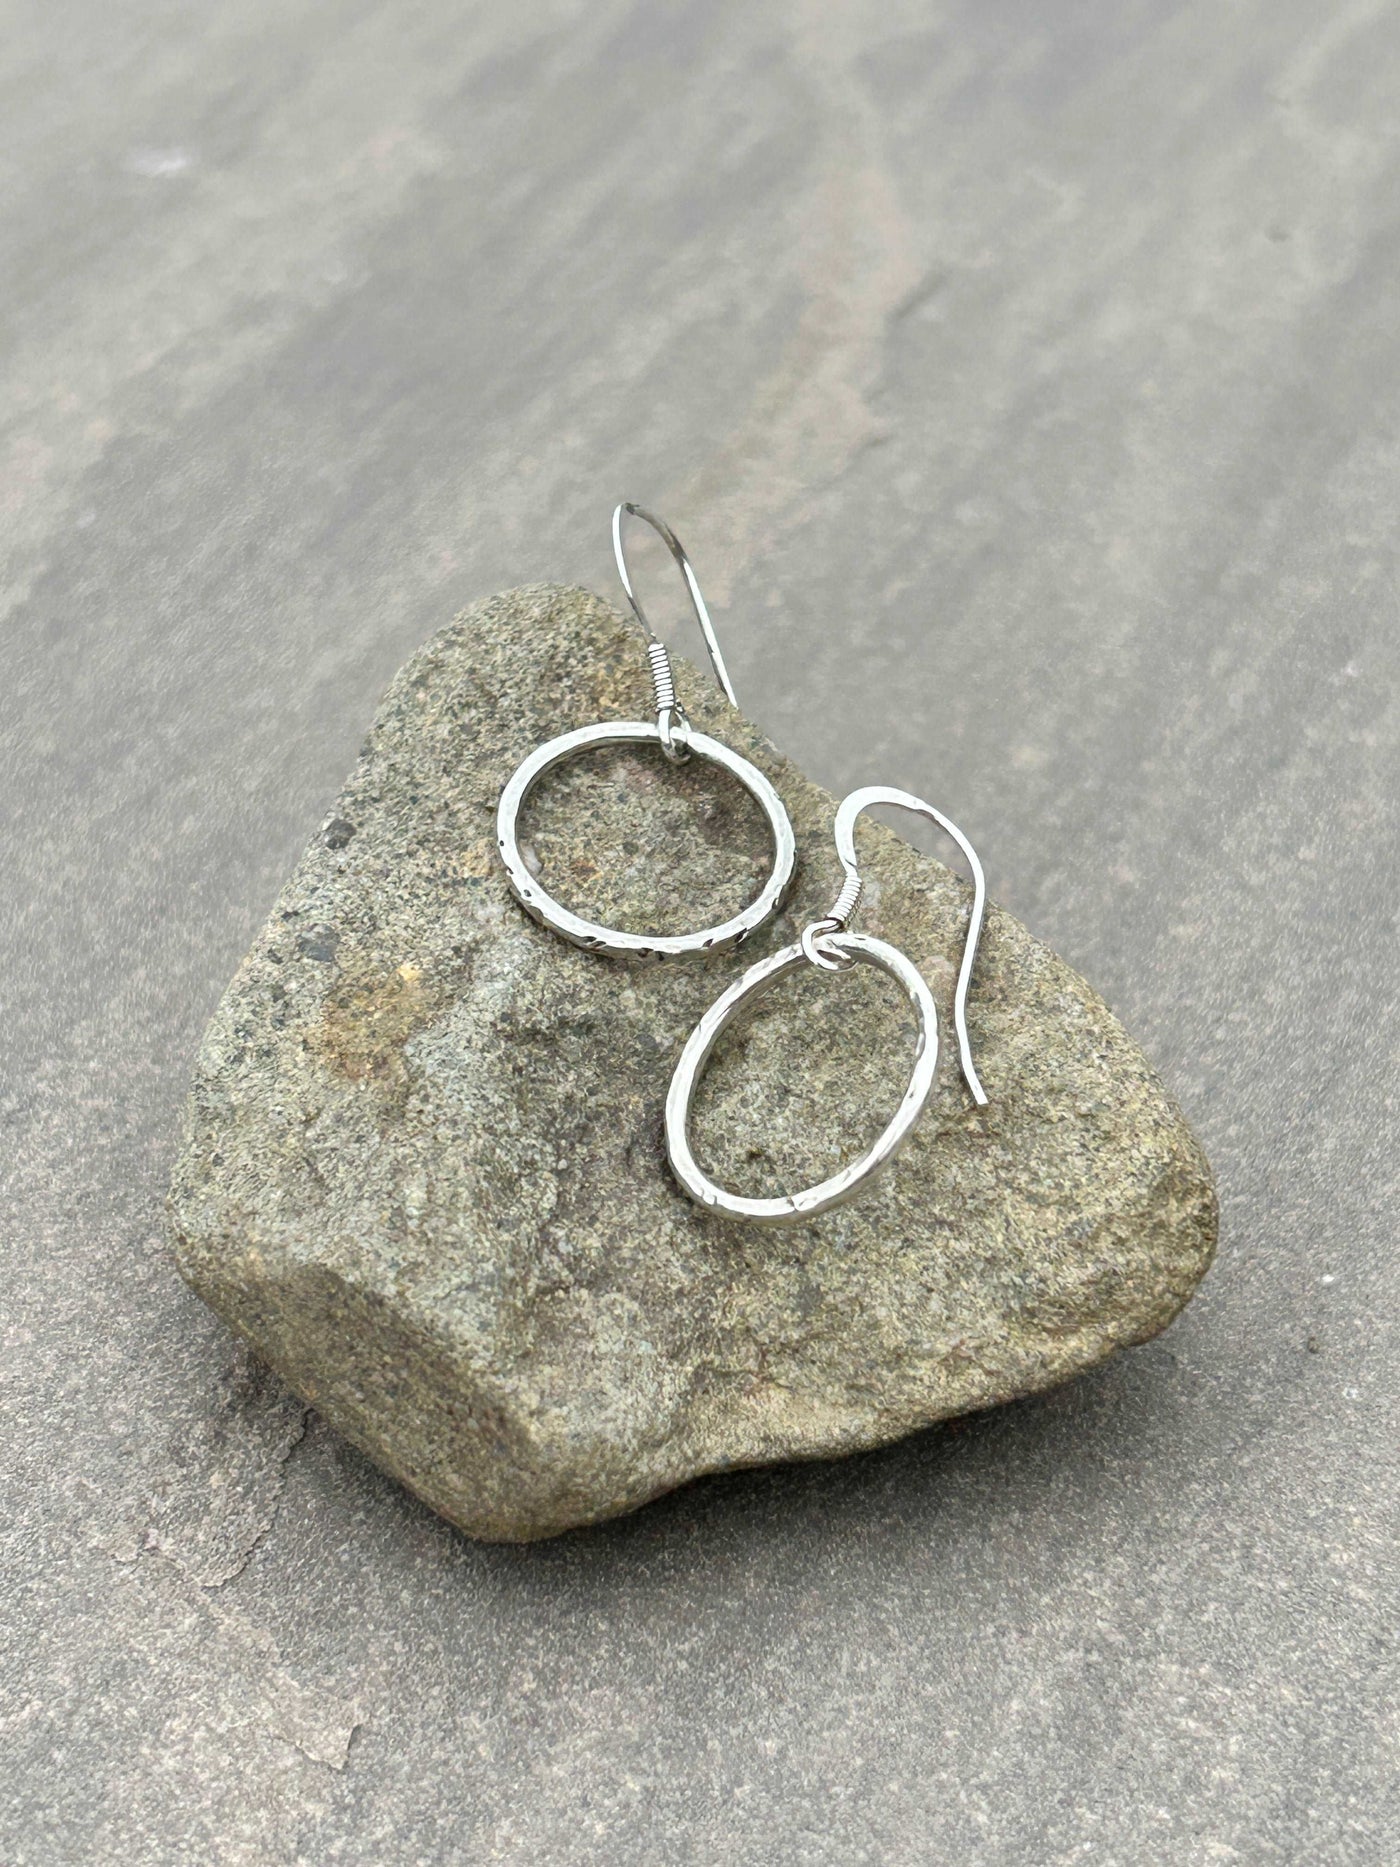 Single ring earrings LaVidaLoca Jewellery